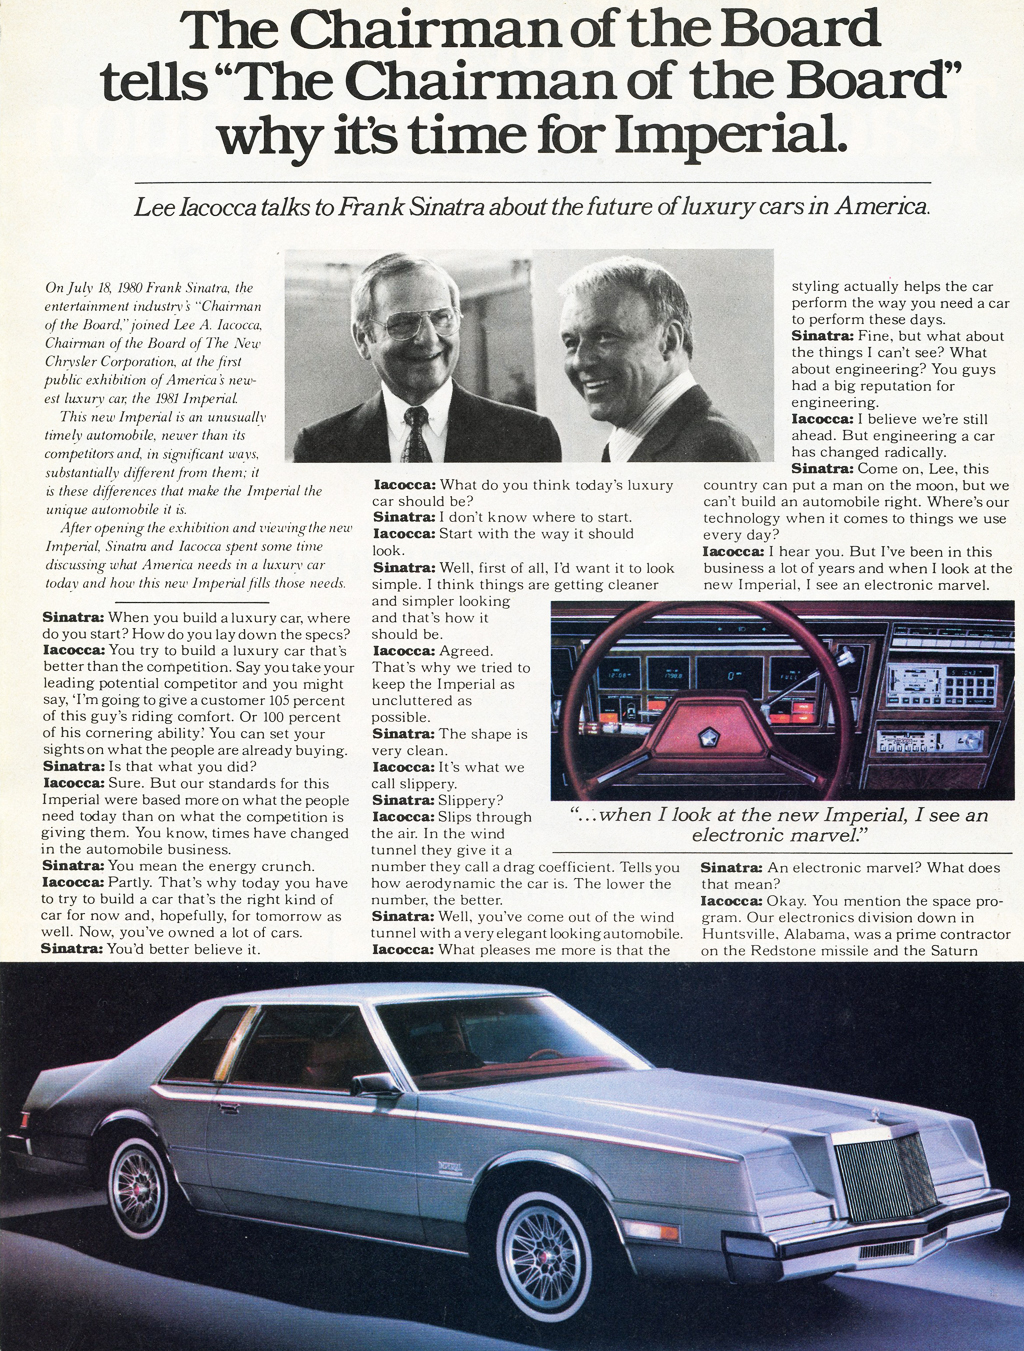 1981 Chrysler Imperial - Frank Sinatra 1